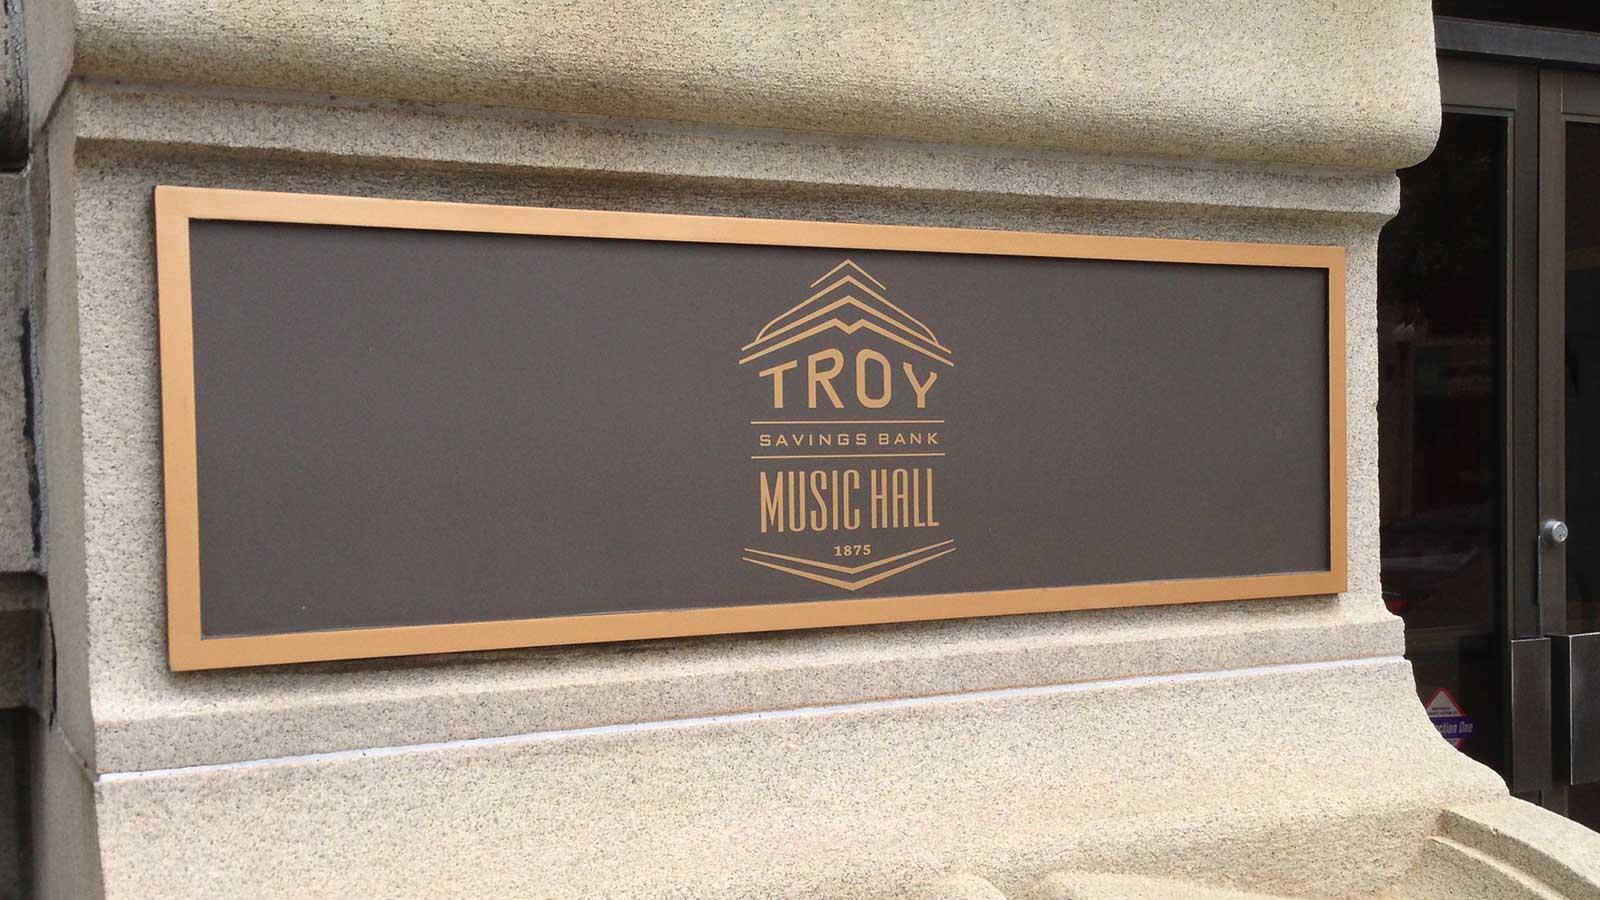 Troy Savings Bank Music Hall | Signage Application